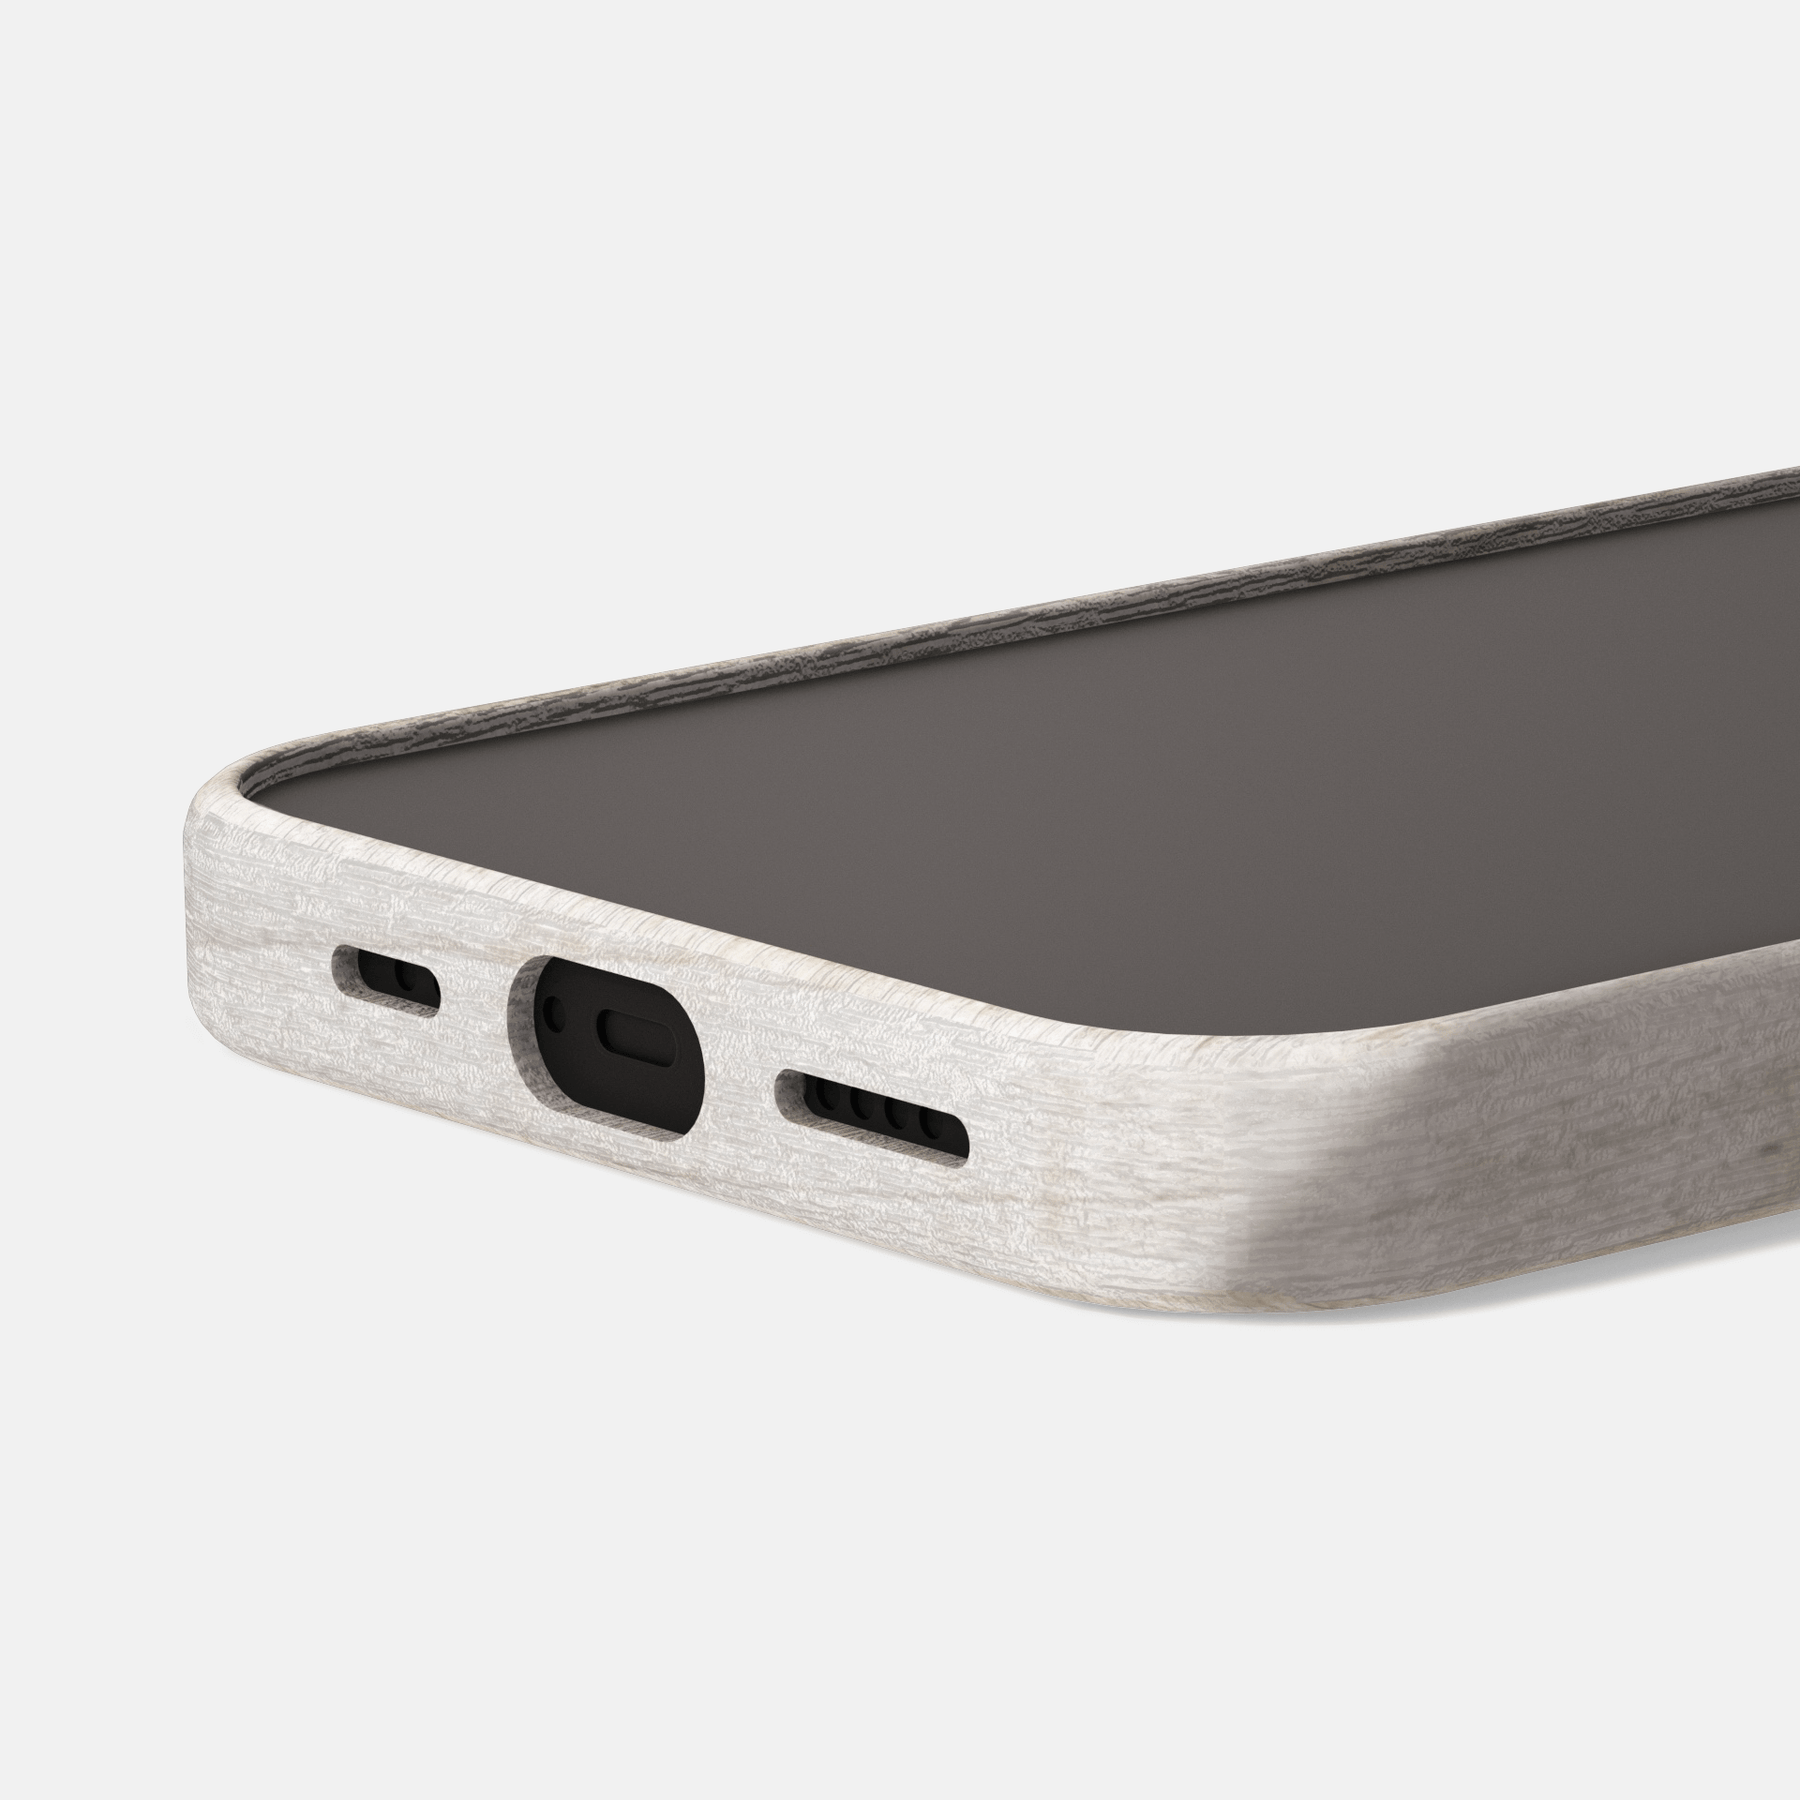 iPhone 15 Pro Wood Phone Case